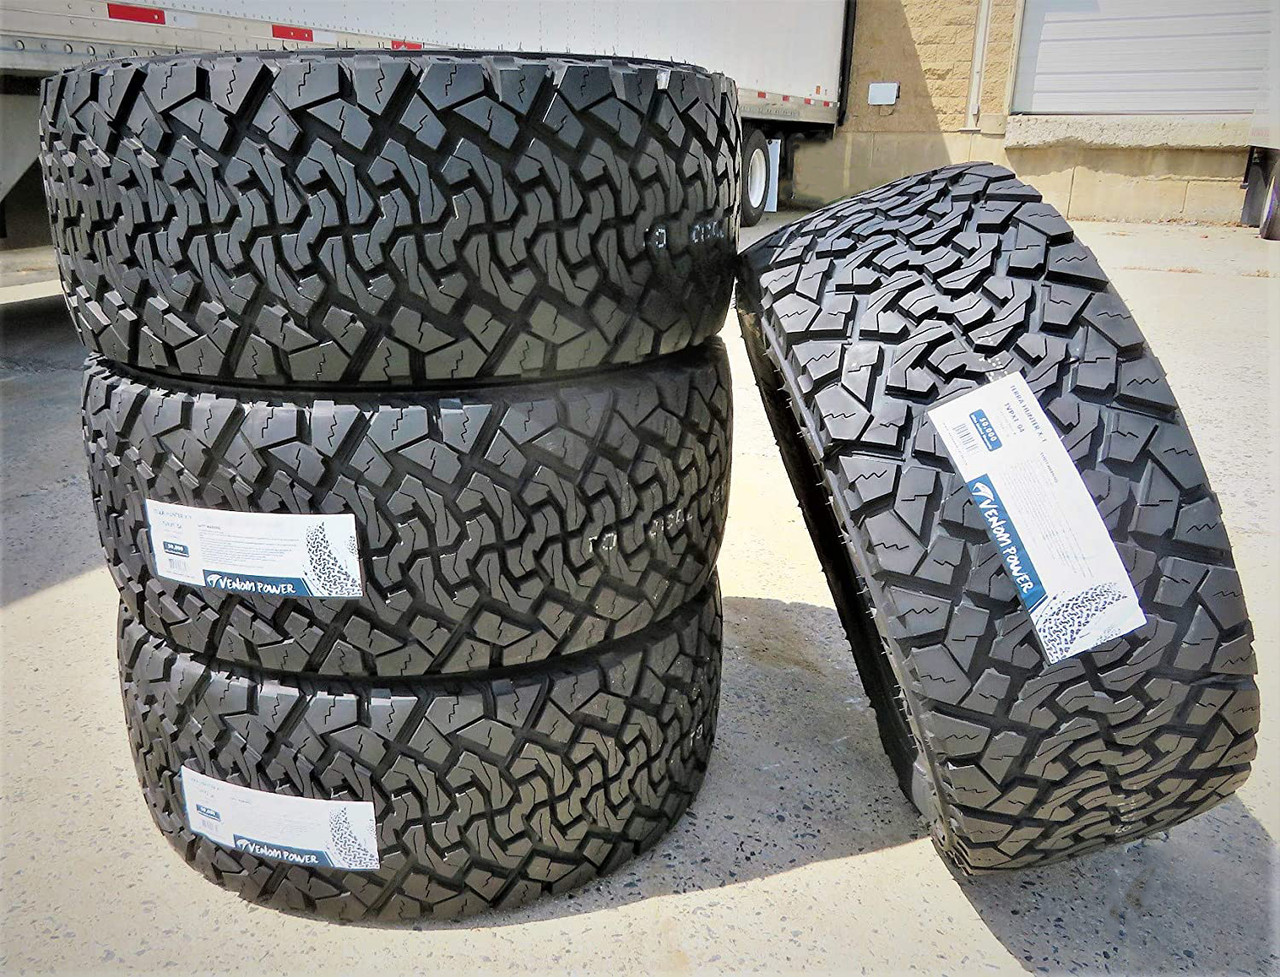 24" Snowflake 24s 33x12.50 R24 tires